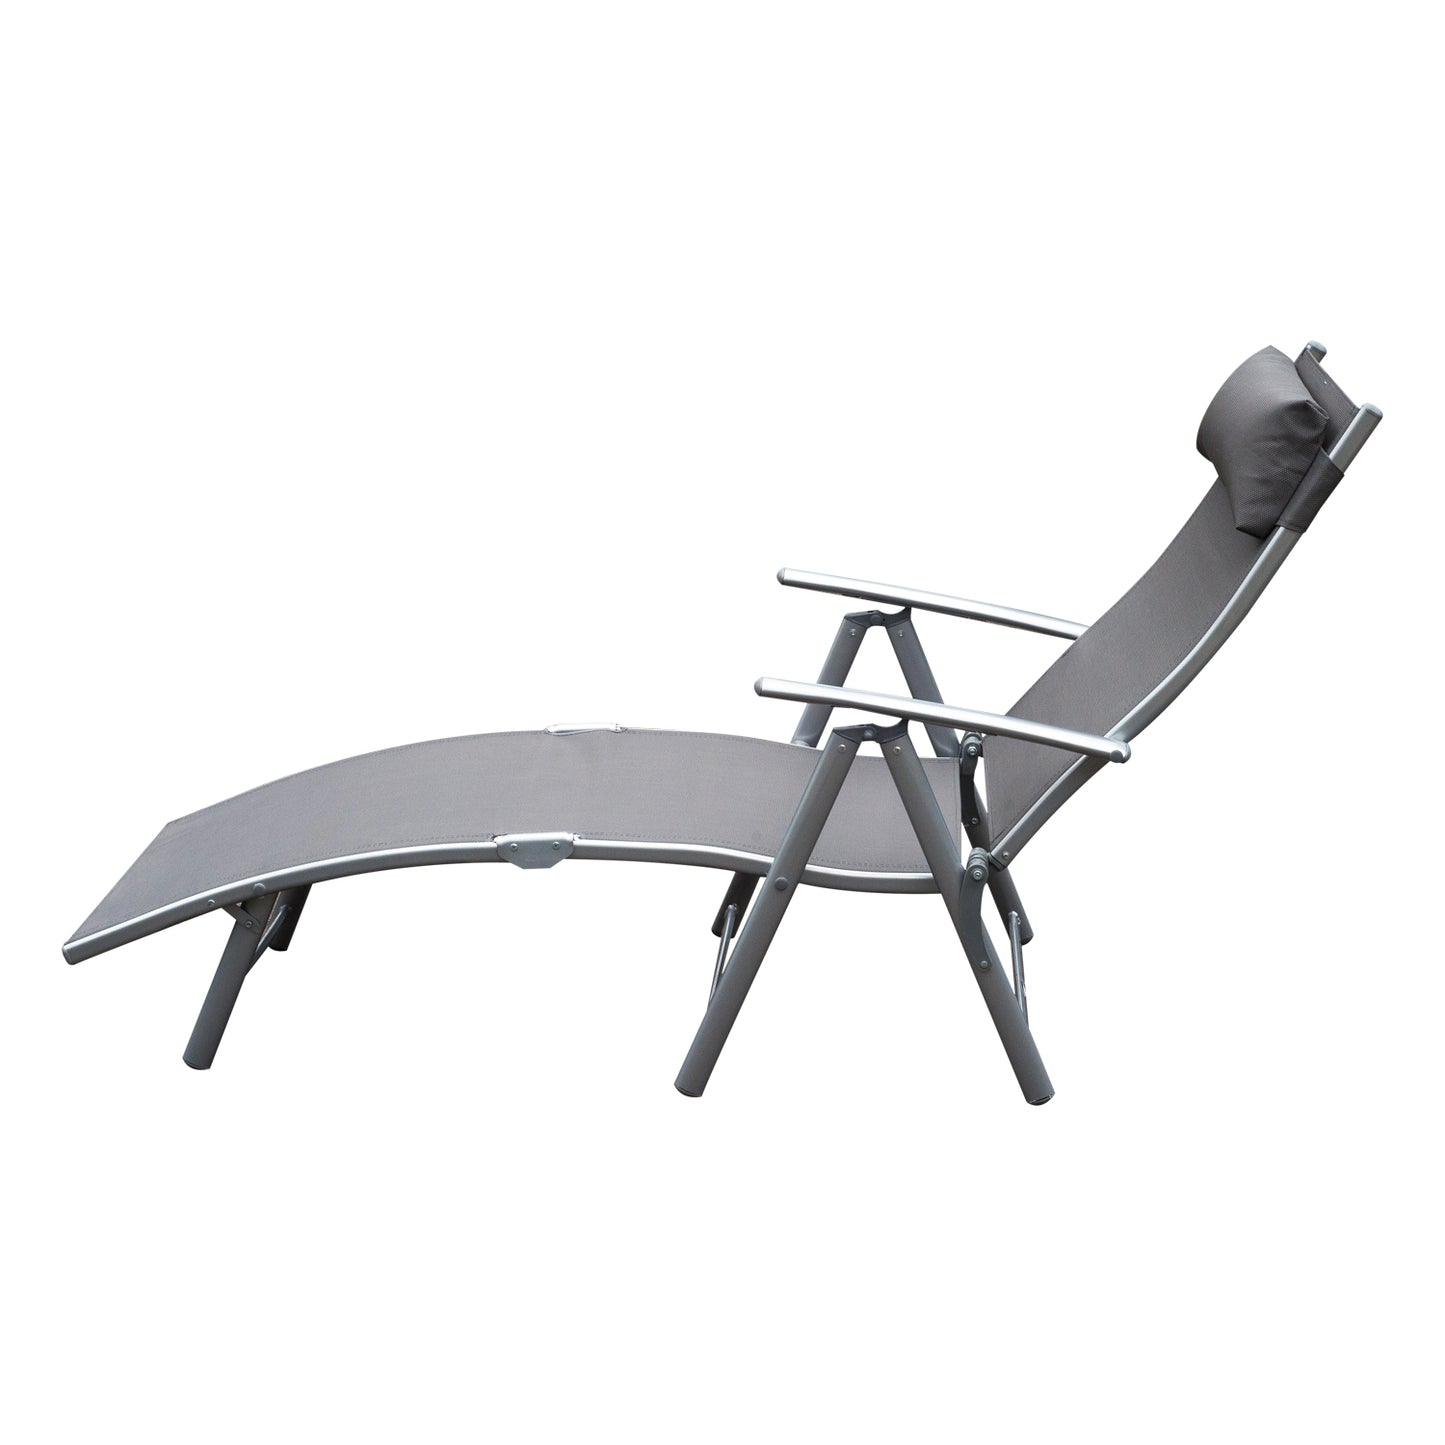 Nancy's Tustin Lounger - Garden chair - Lounge chair - Cushion - Foldable - Gray - Metal - Textile